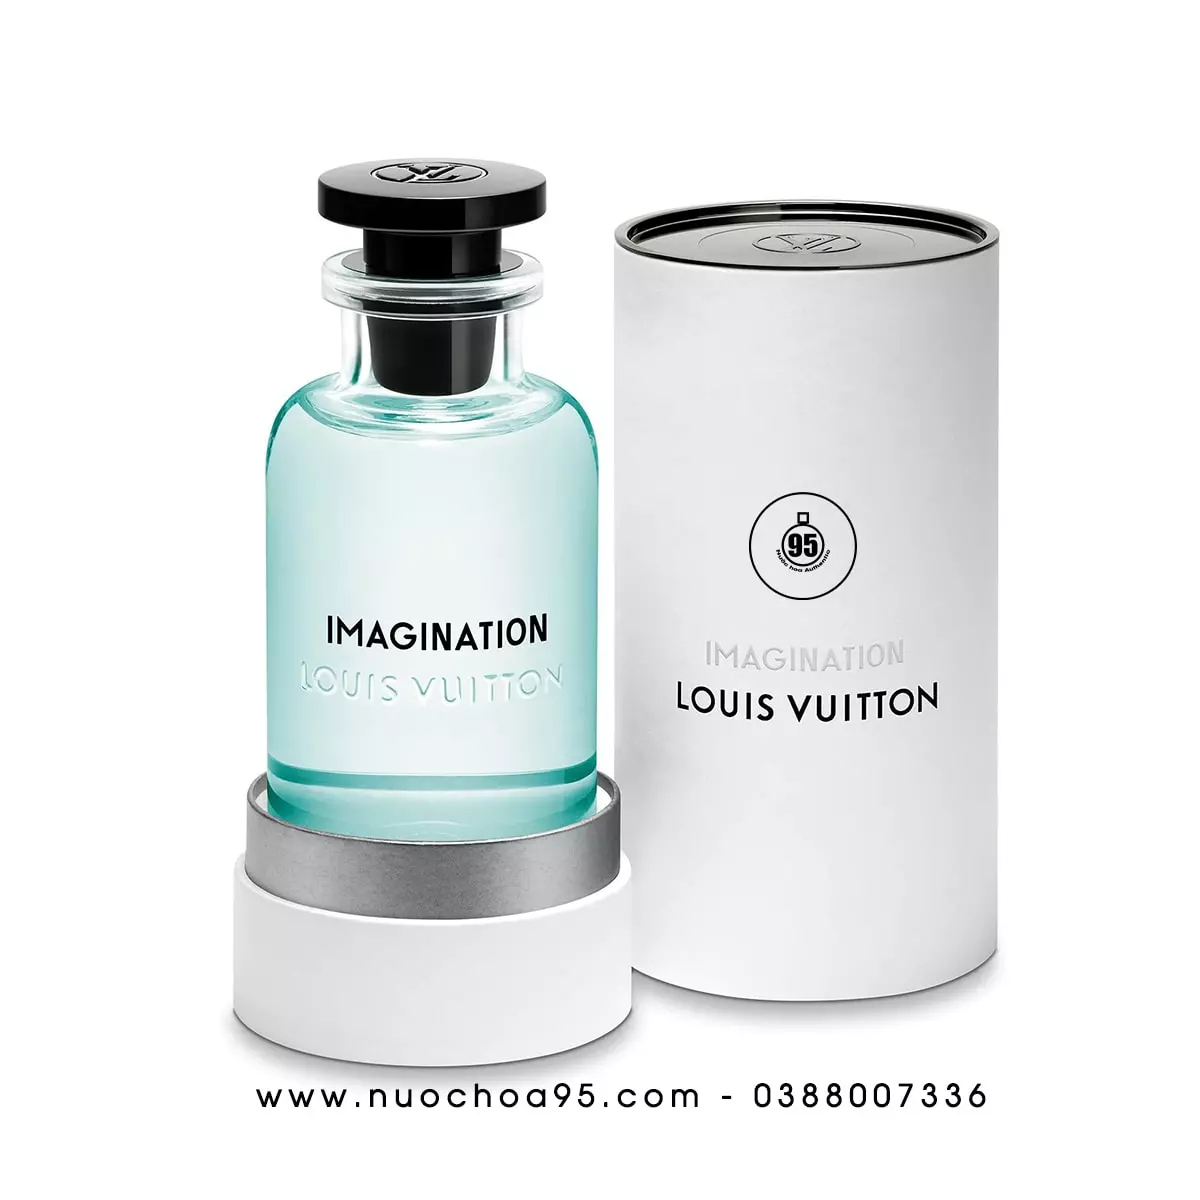 Nước hoa Louis Vuitton Imagination